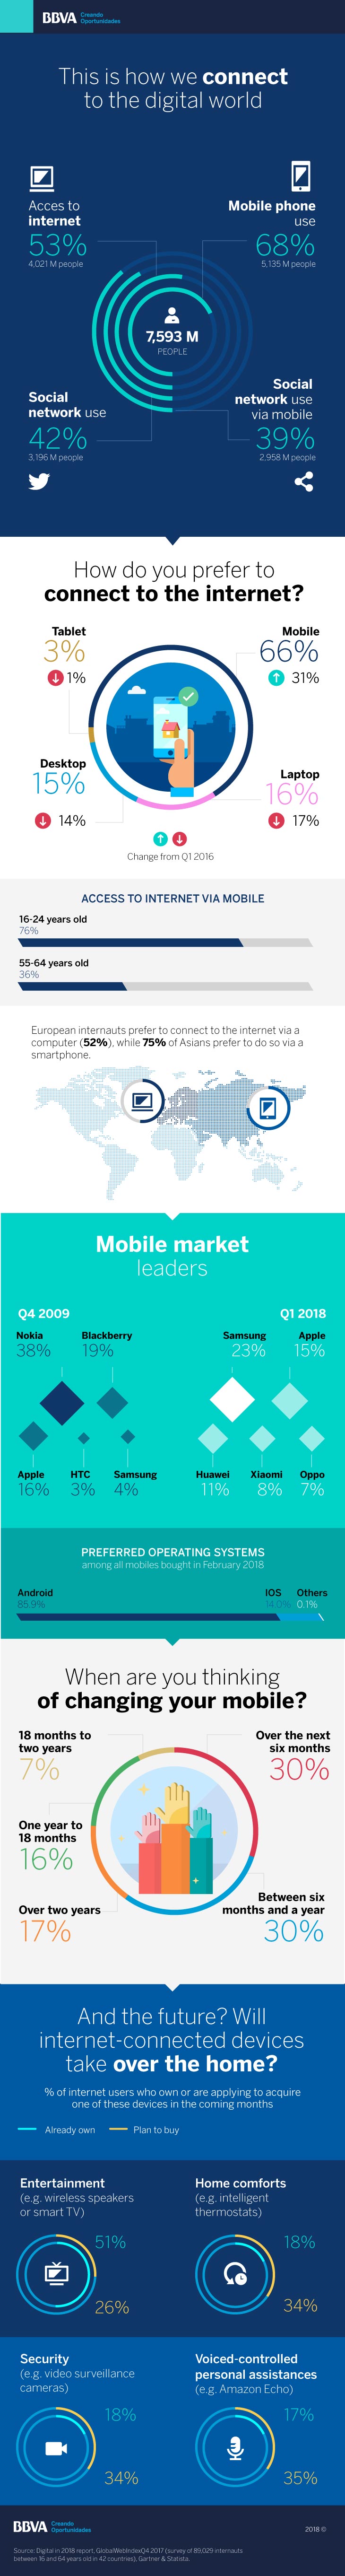 bbva-smartphones-infografia